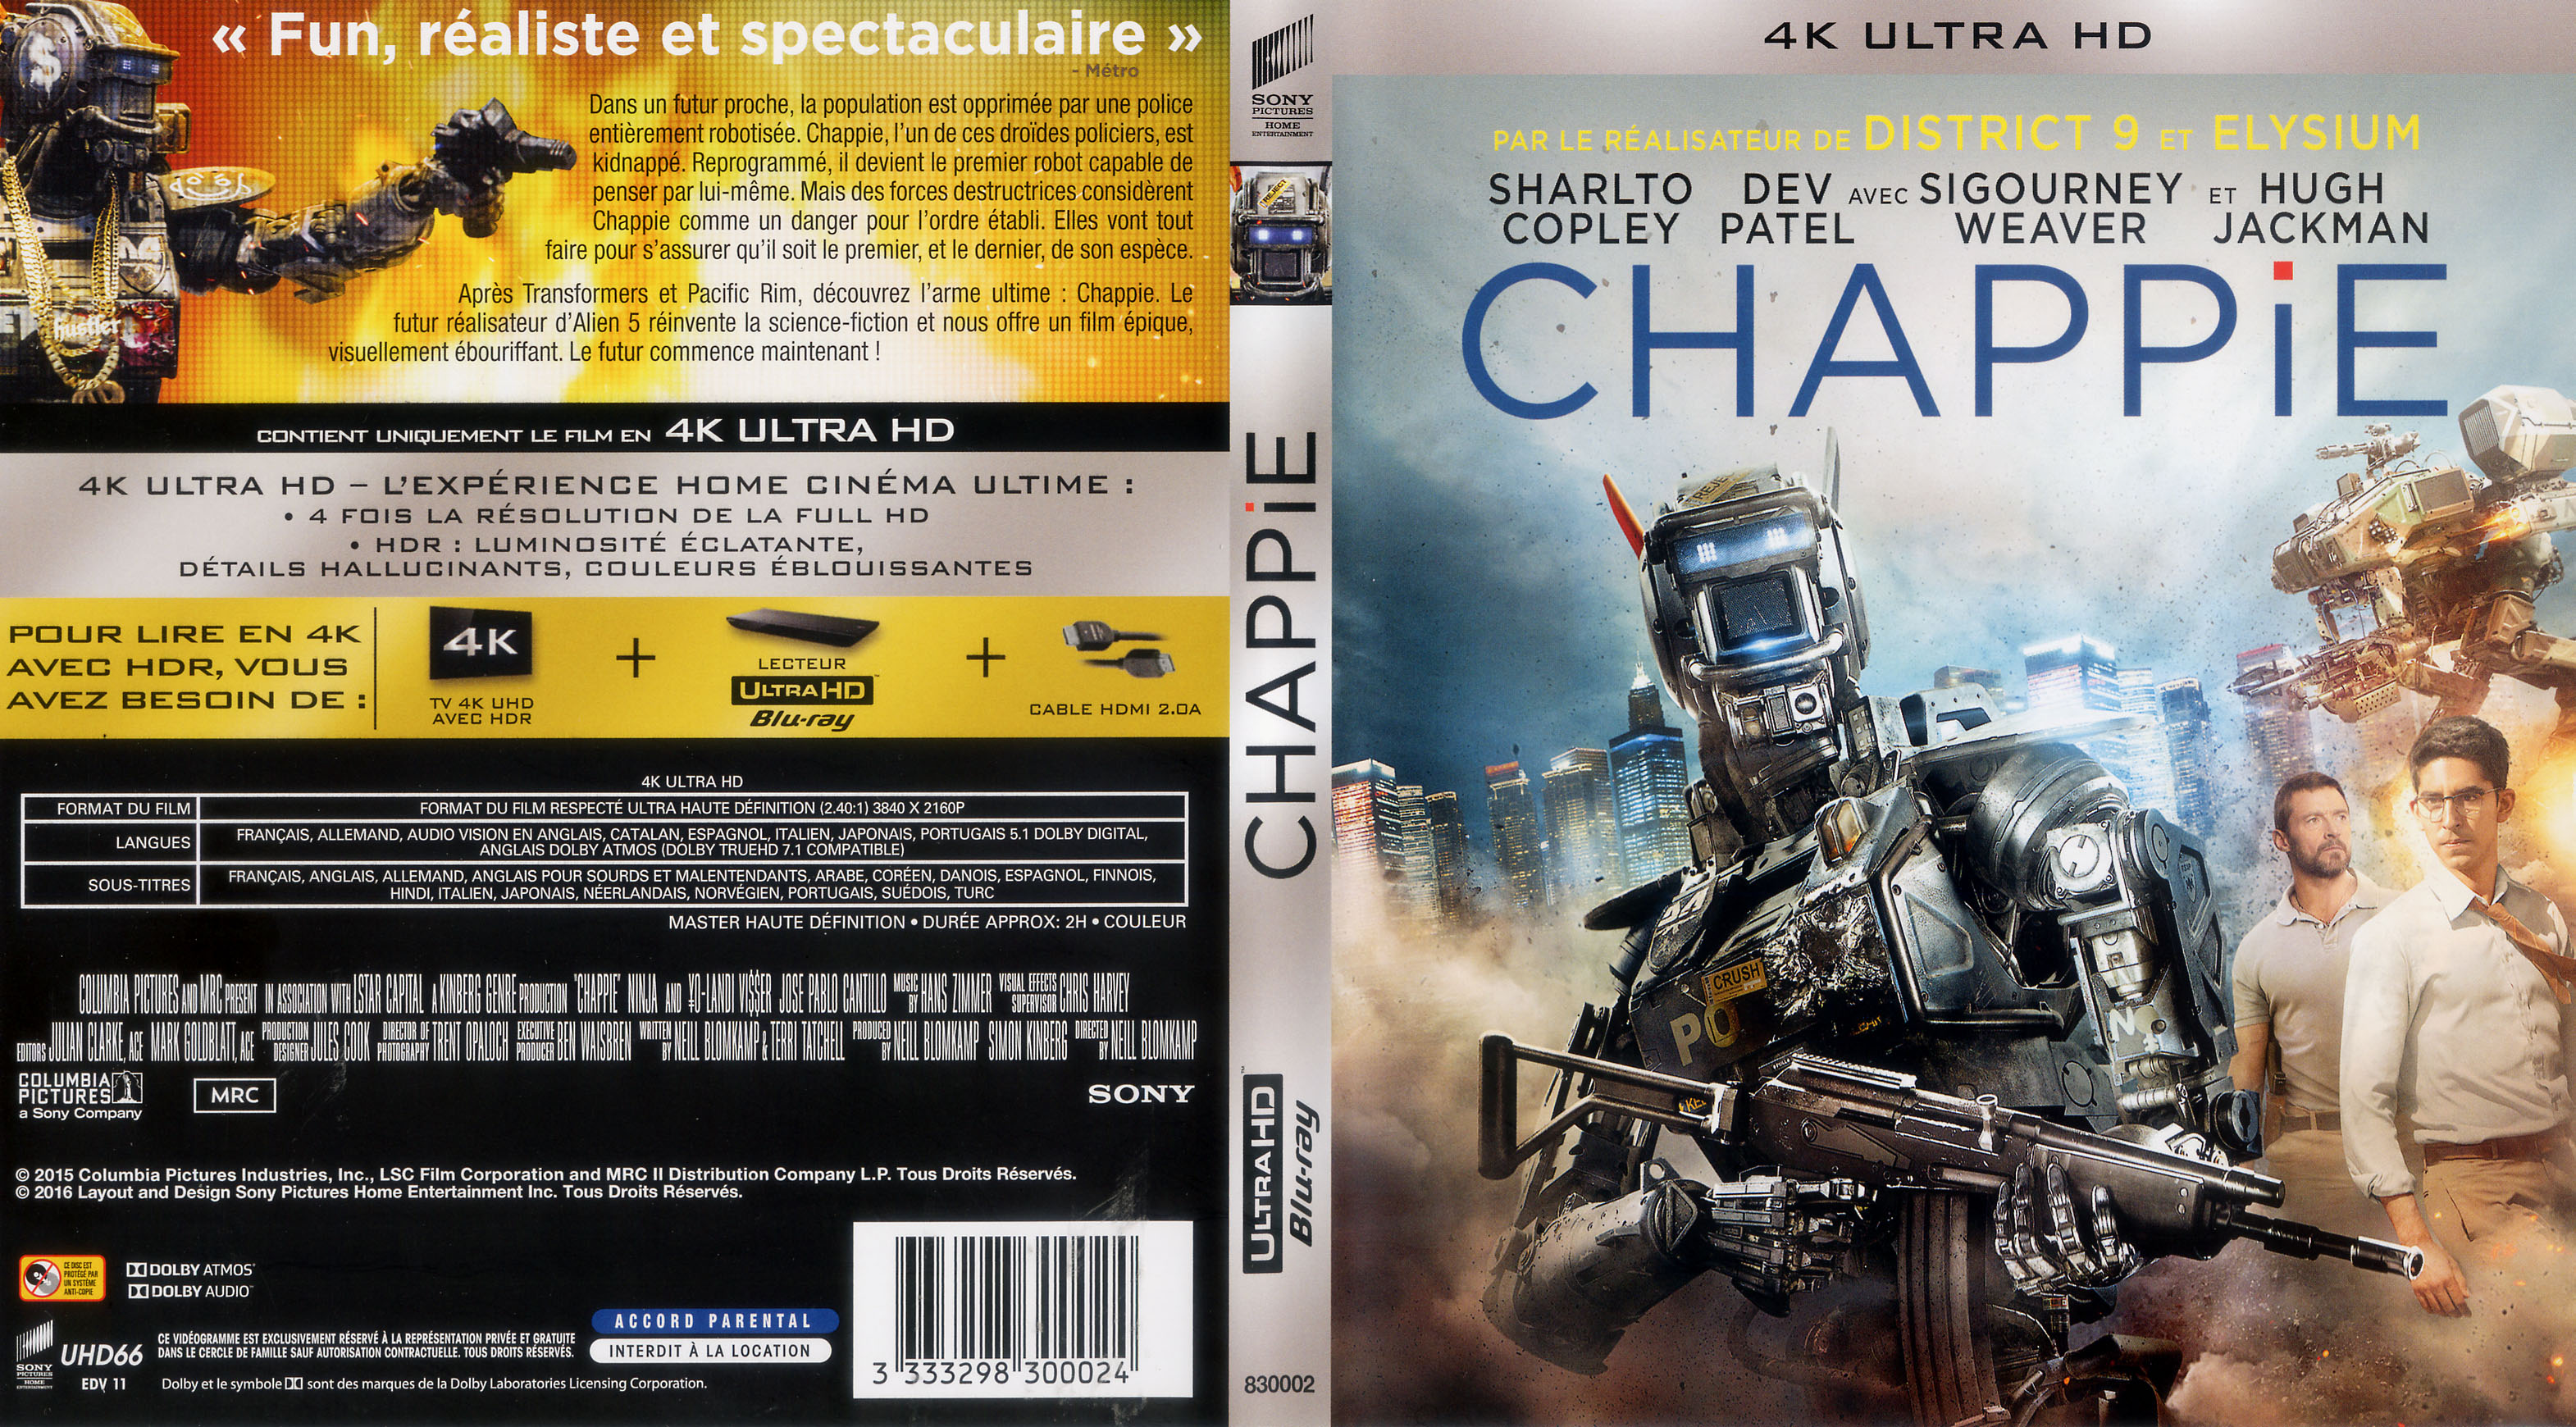 Jaquette DVD Chappie 4K (BLU-RAY)